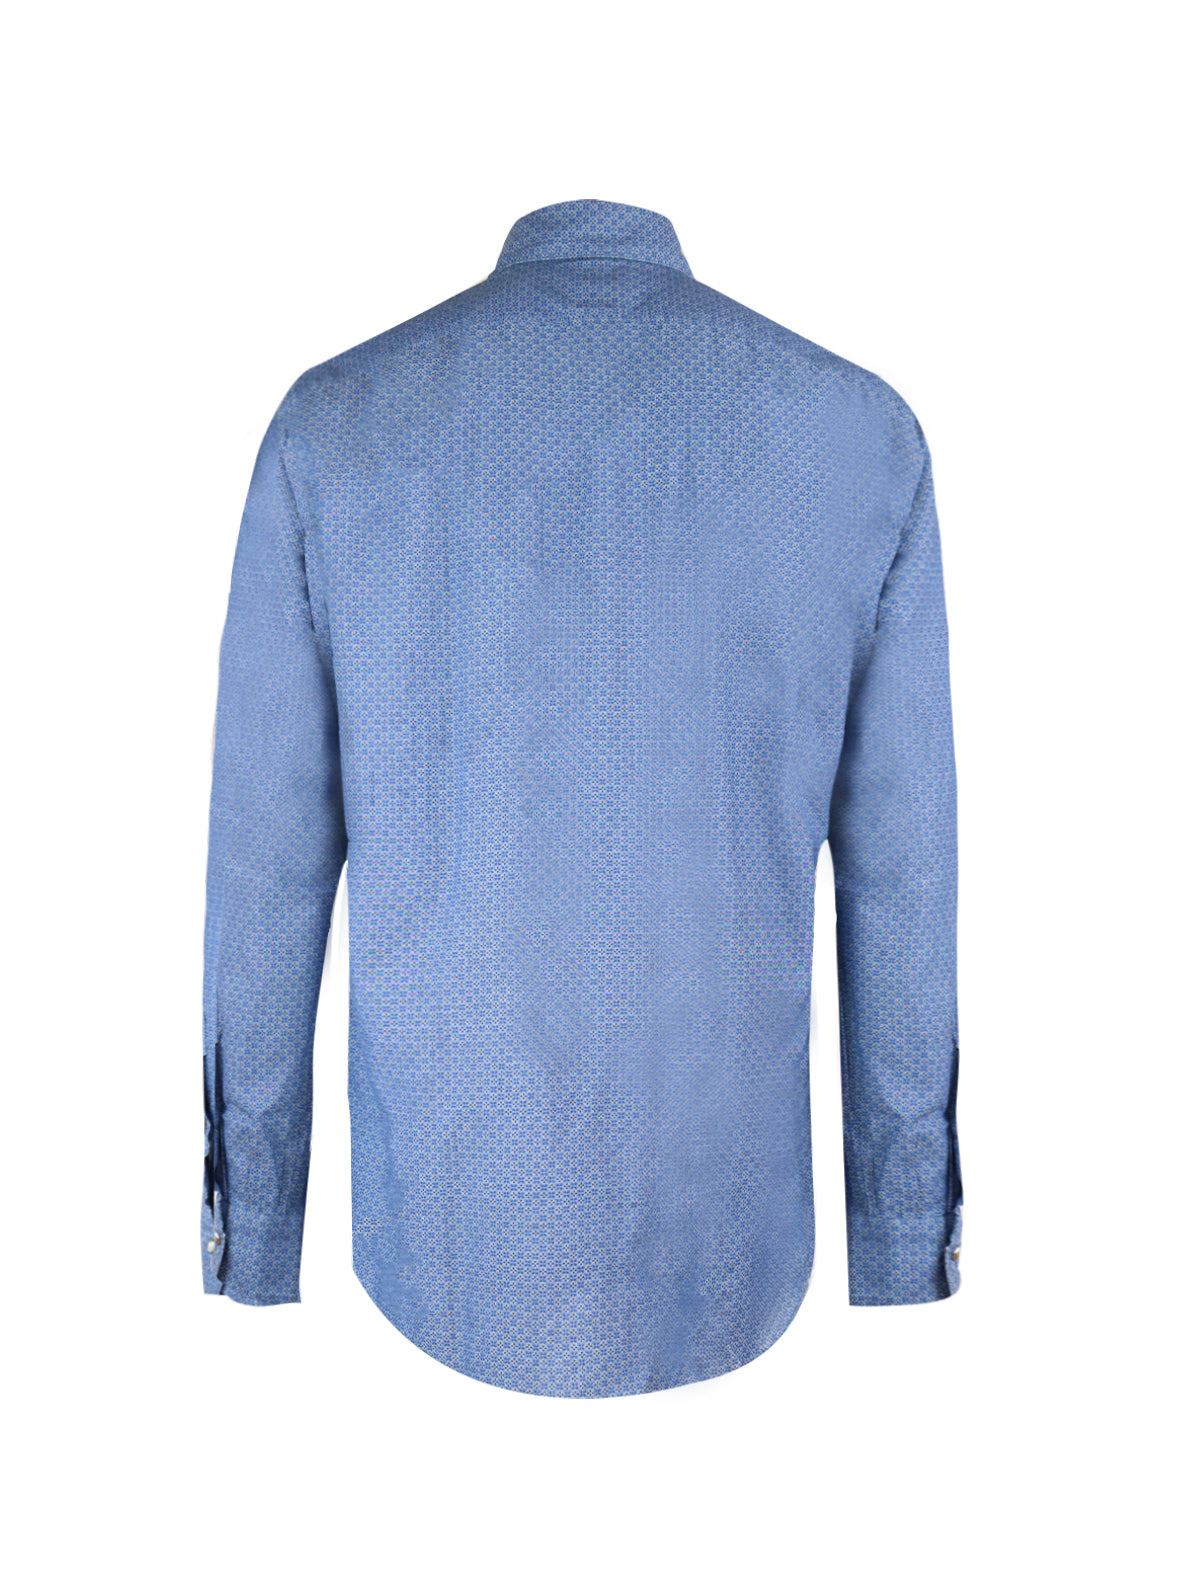 Giannetto Portofino Printed Shirt in Blue